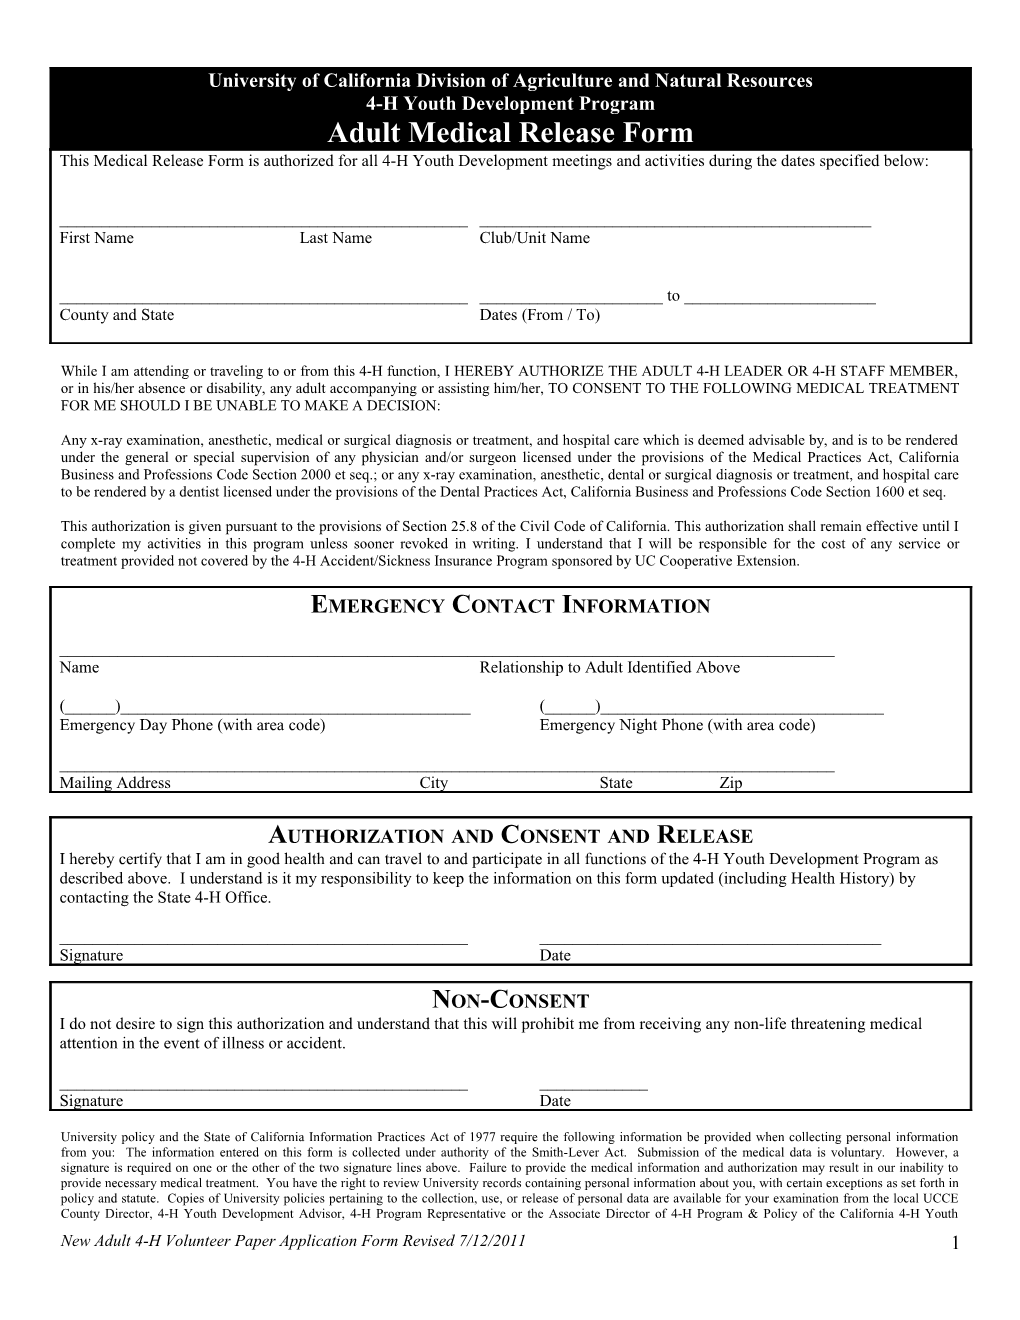 CA 4-H Adult New Application Form